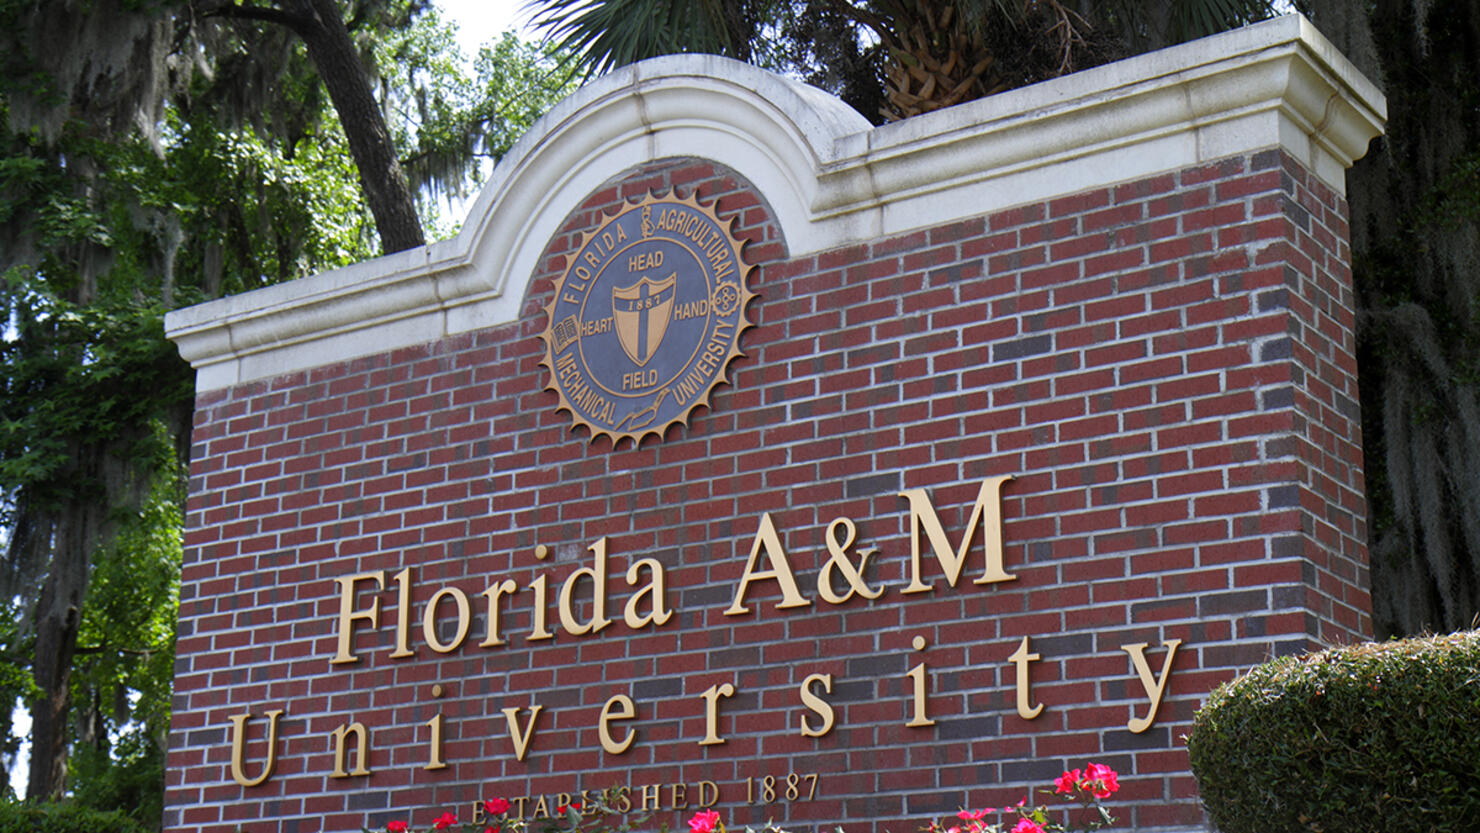 Florida A&M University entrance sign.